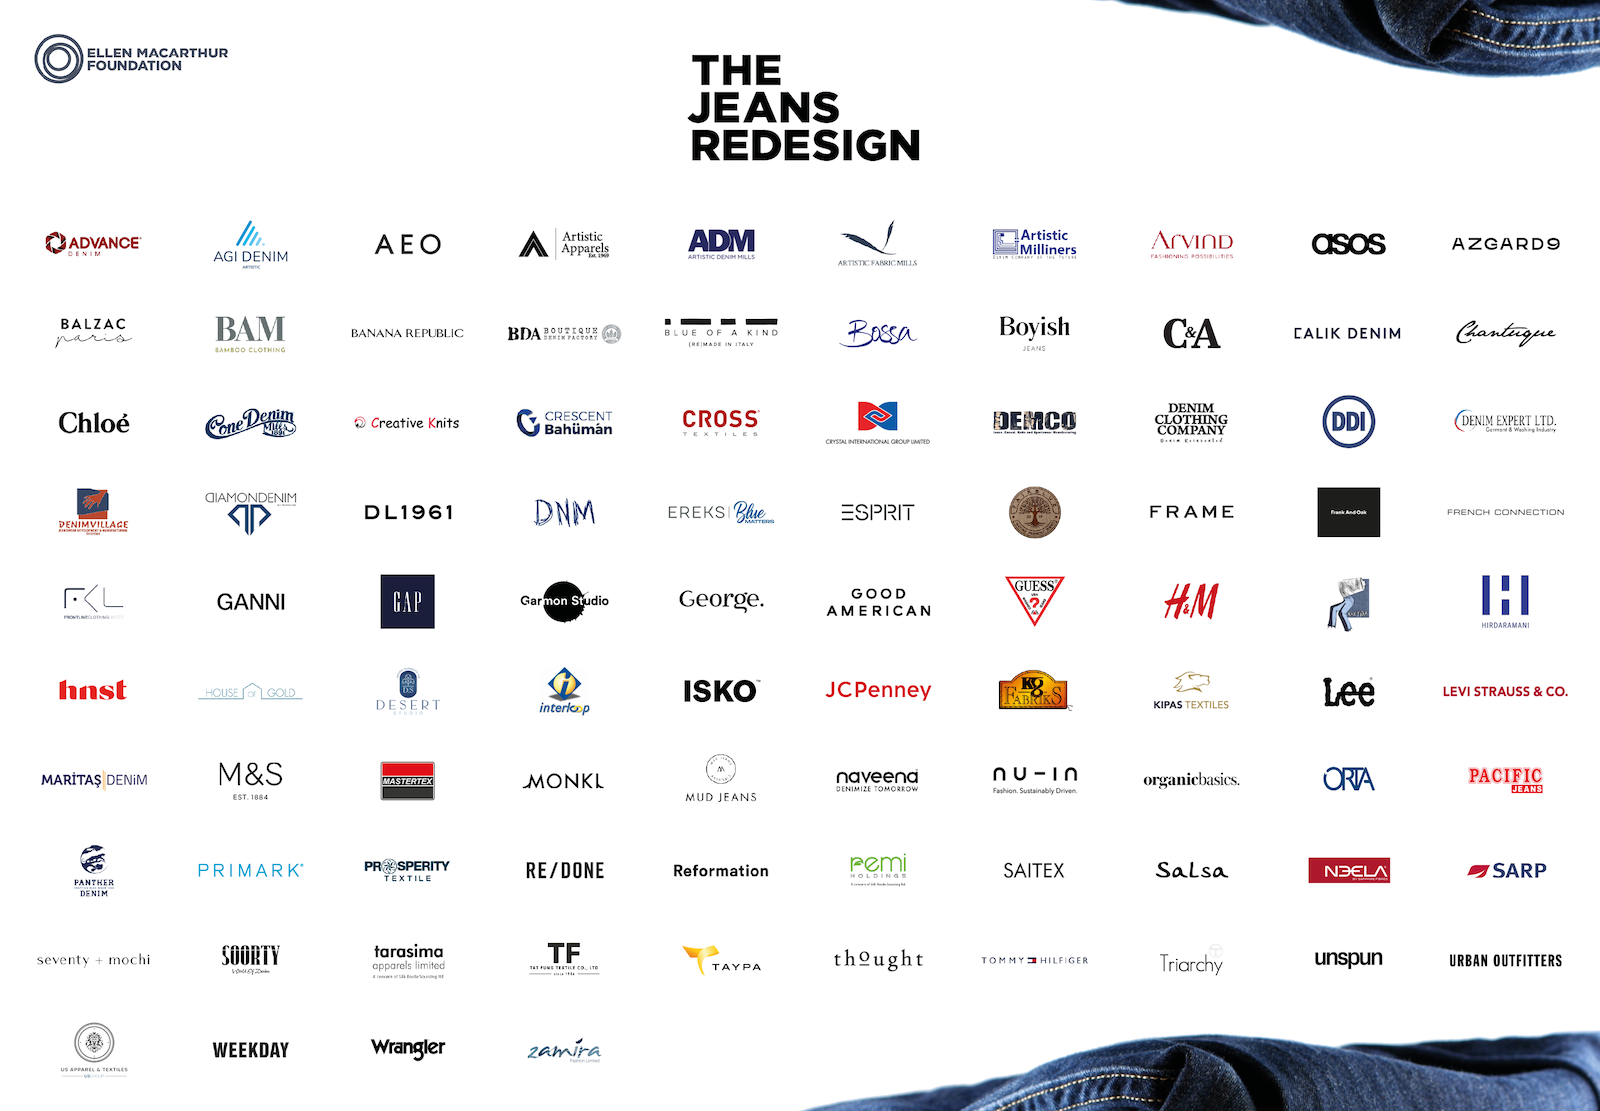 32 Best Jean Brands for Men 2023 - Denim Brands to Shop